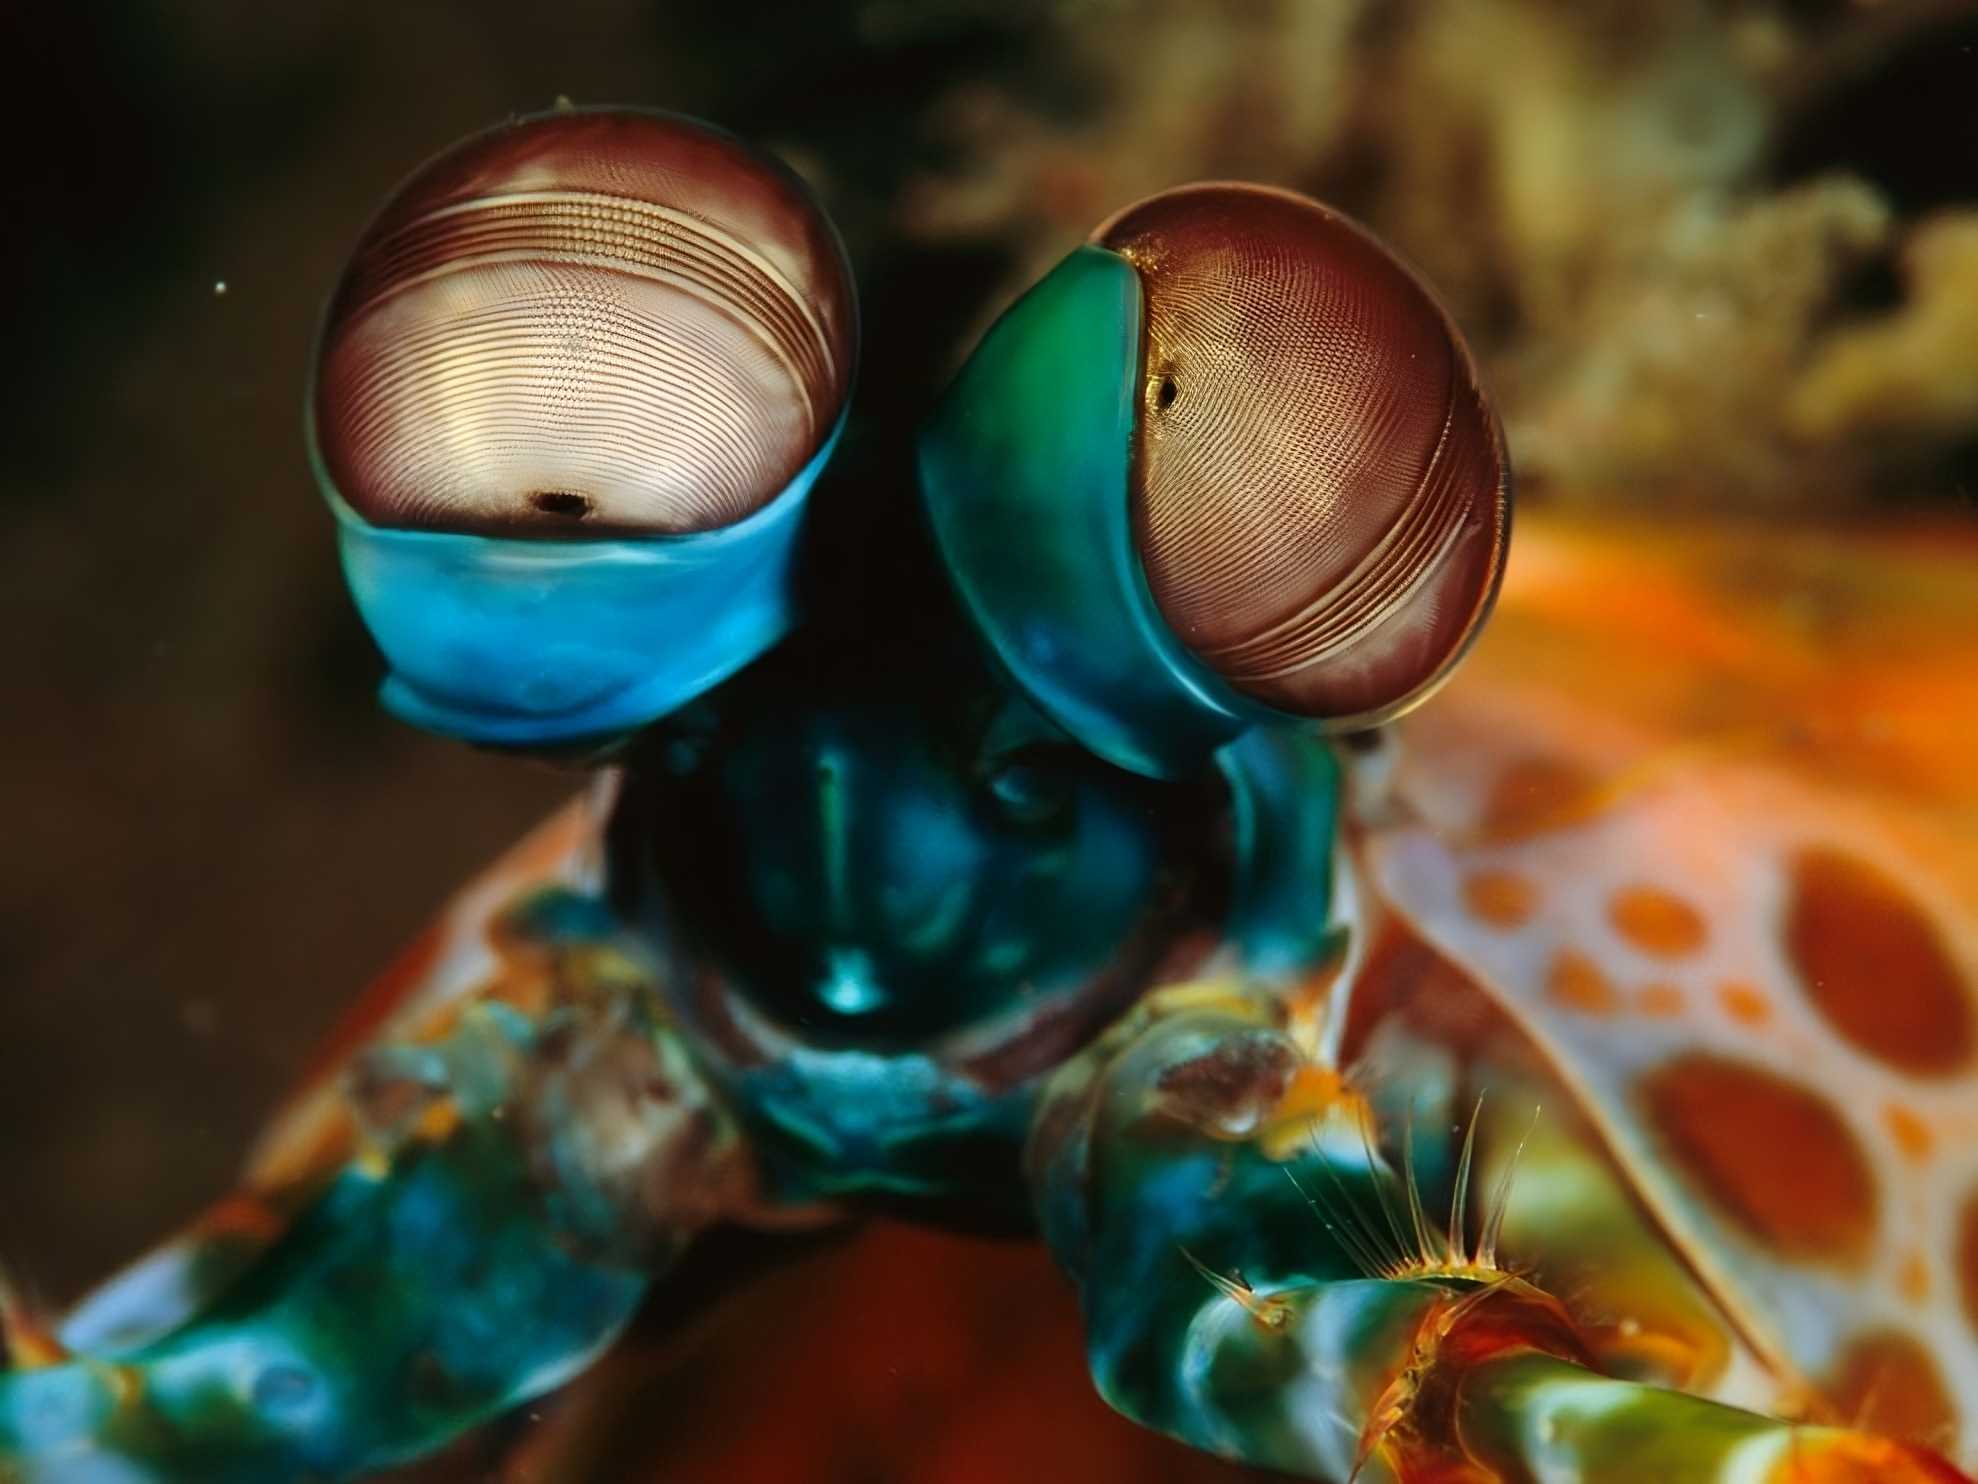 Mantis shrimps’ eyes.